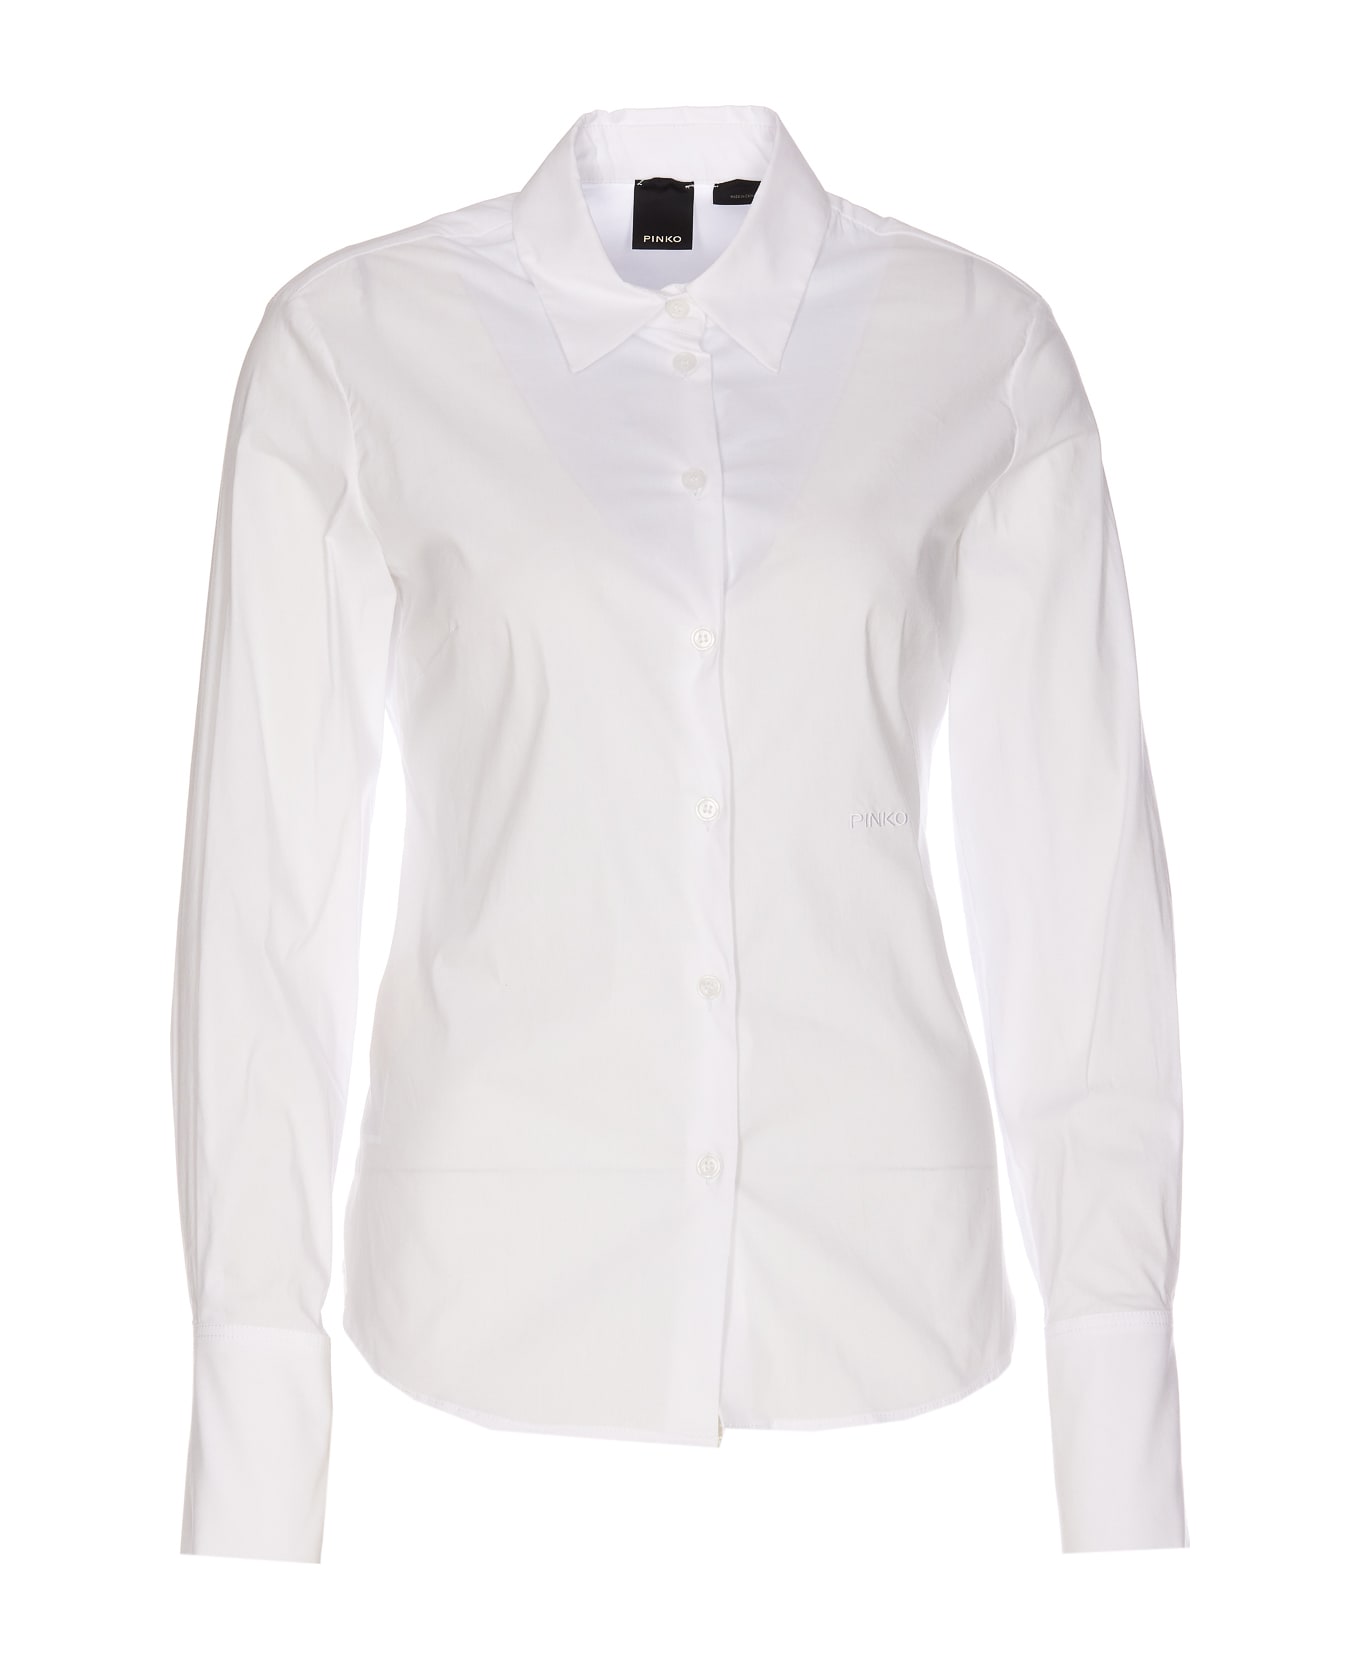 Pinko Flanked Poplin Shirt - White